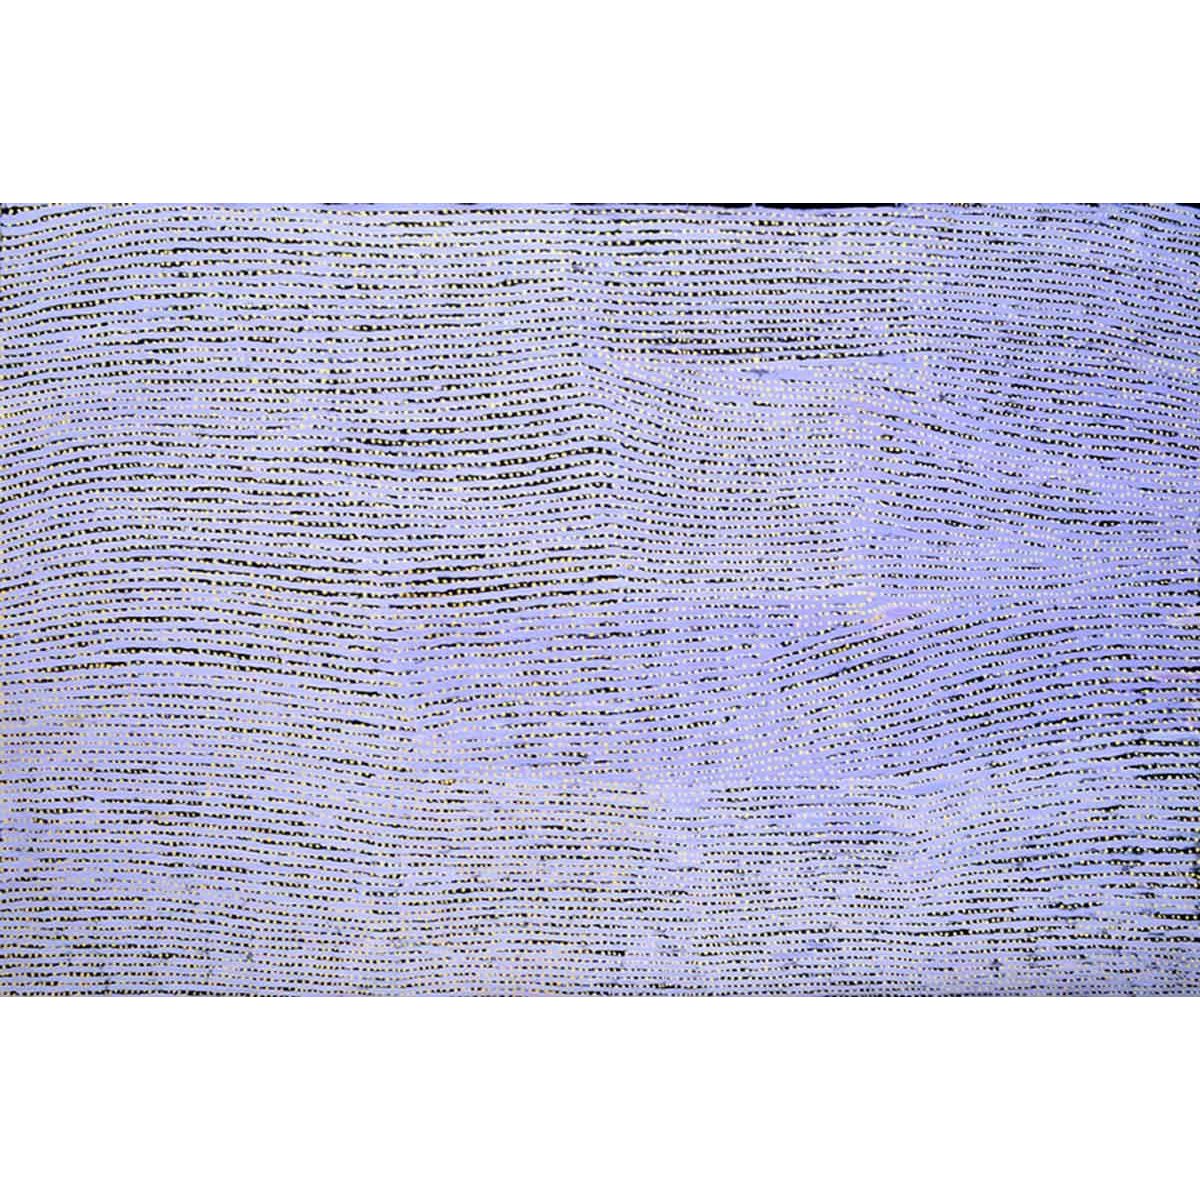 Willy Tjungurrayi | Kaakuratintja (Lake McDonald) A12295 - Mitchell Fine Art